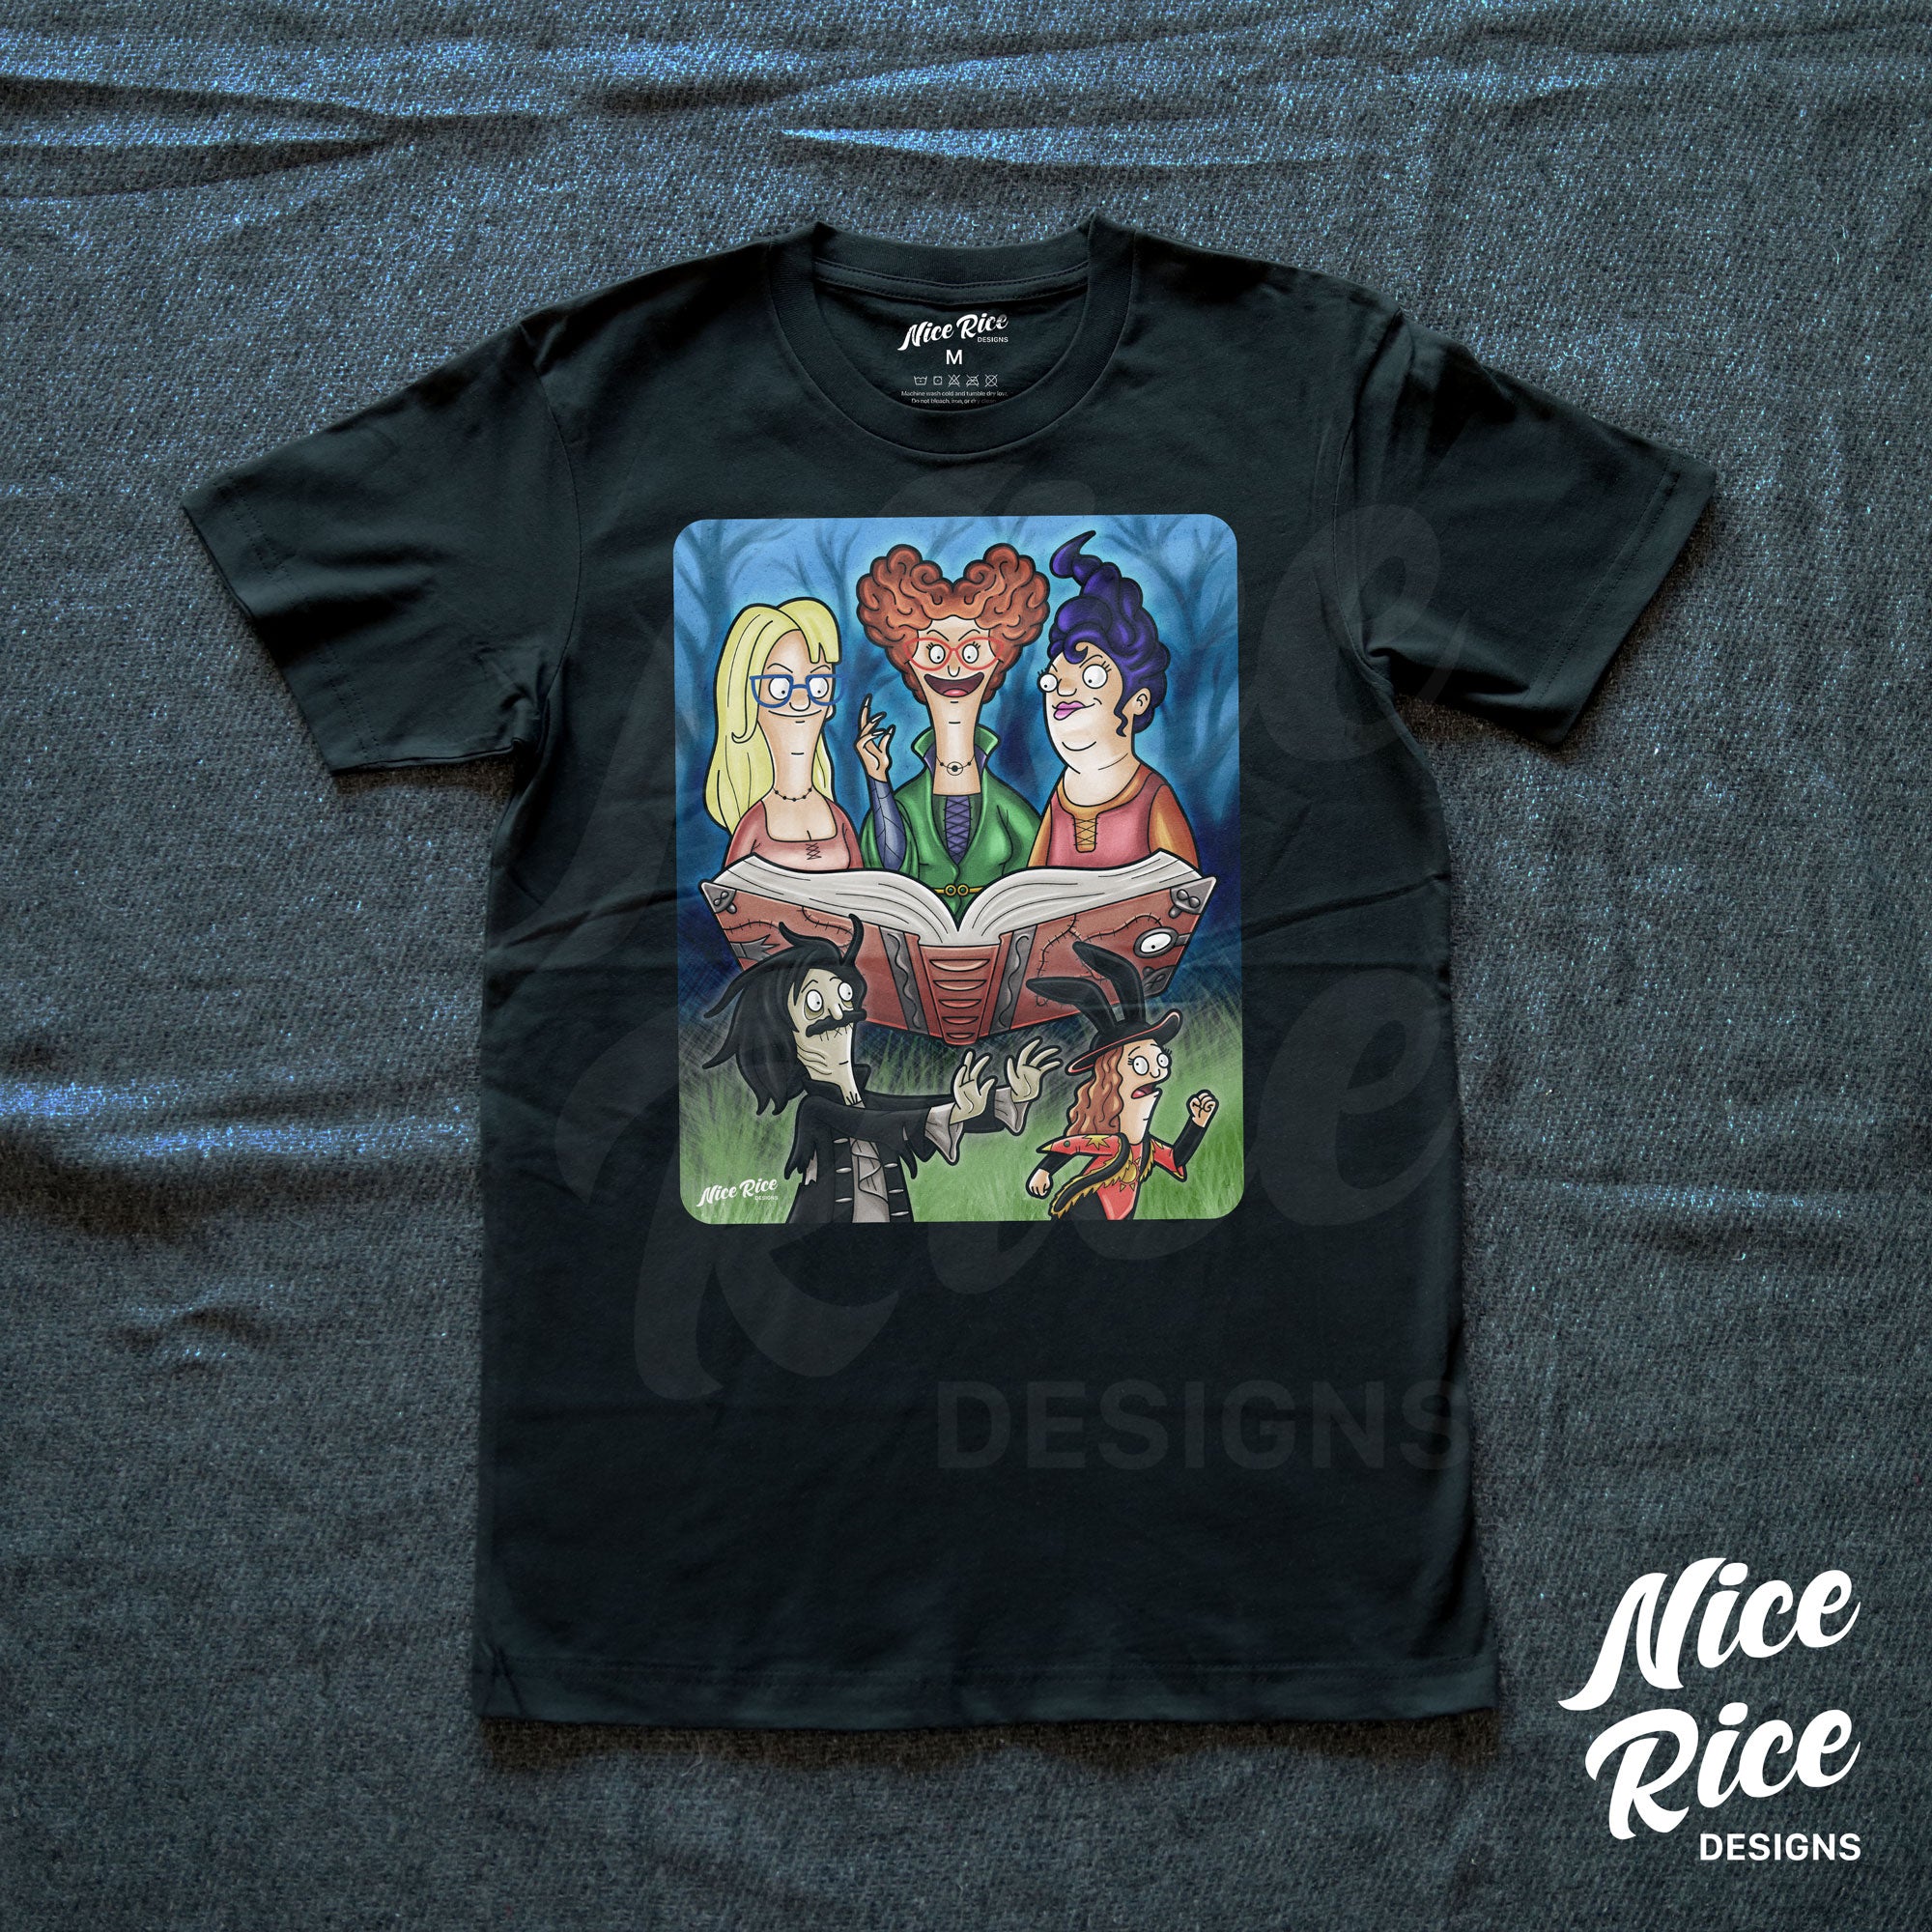 Hocus Pocus Shirt by Nice Rice Designs